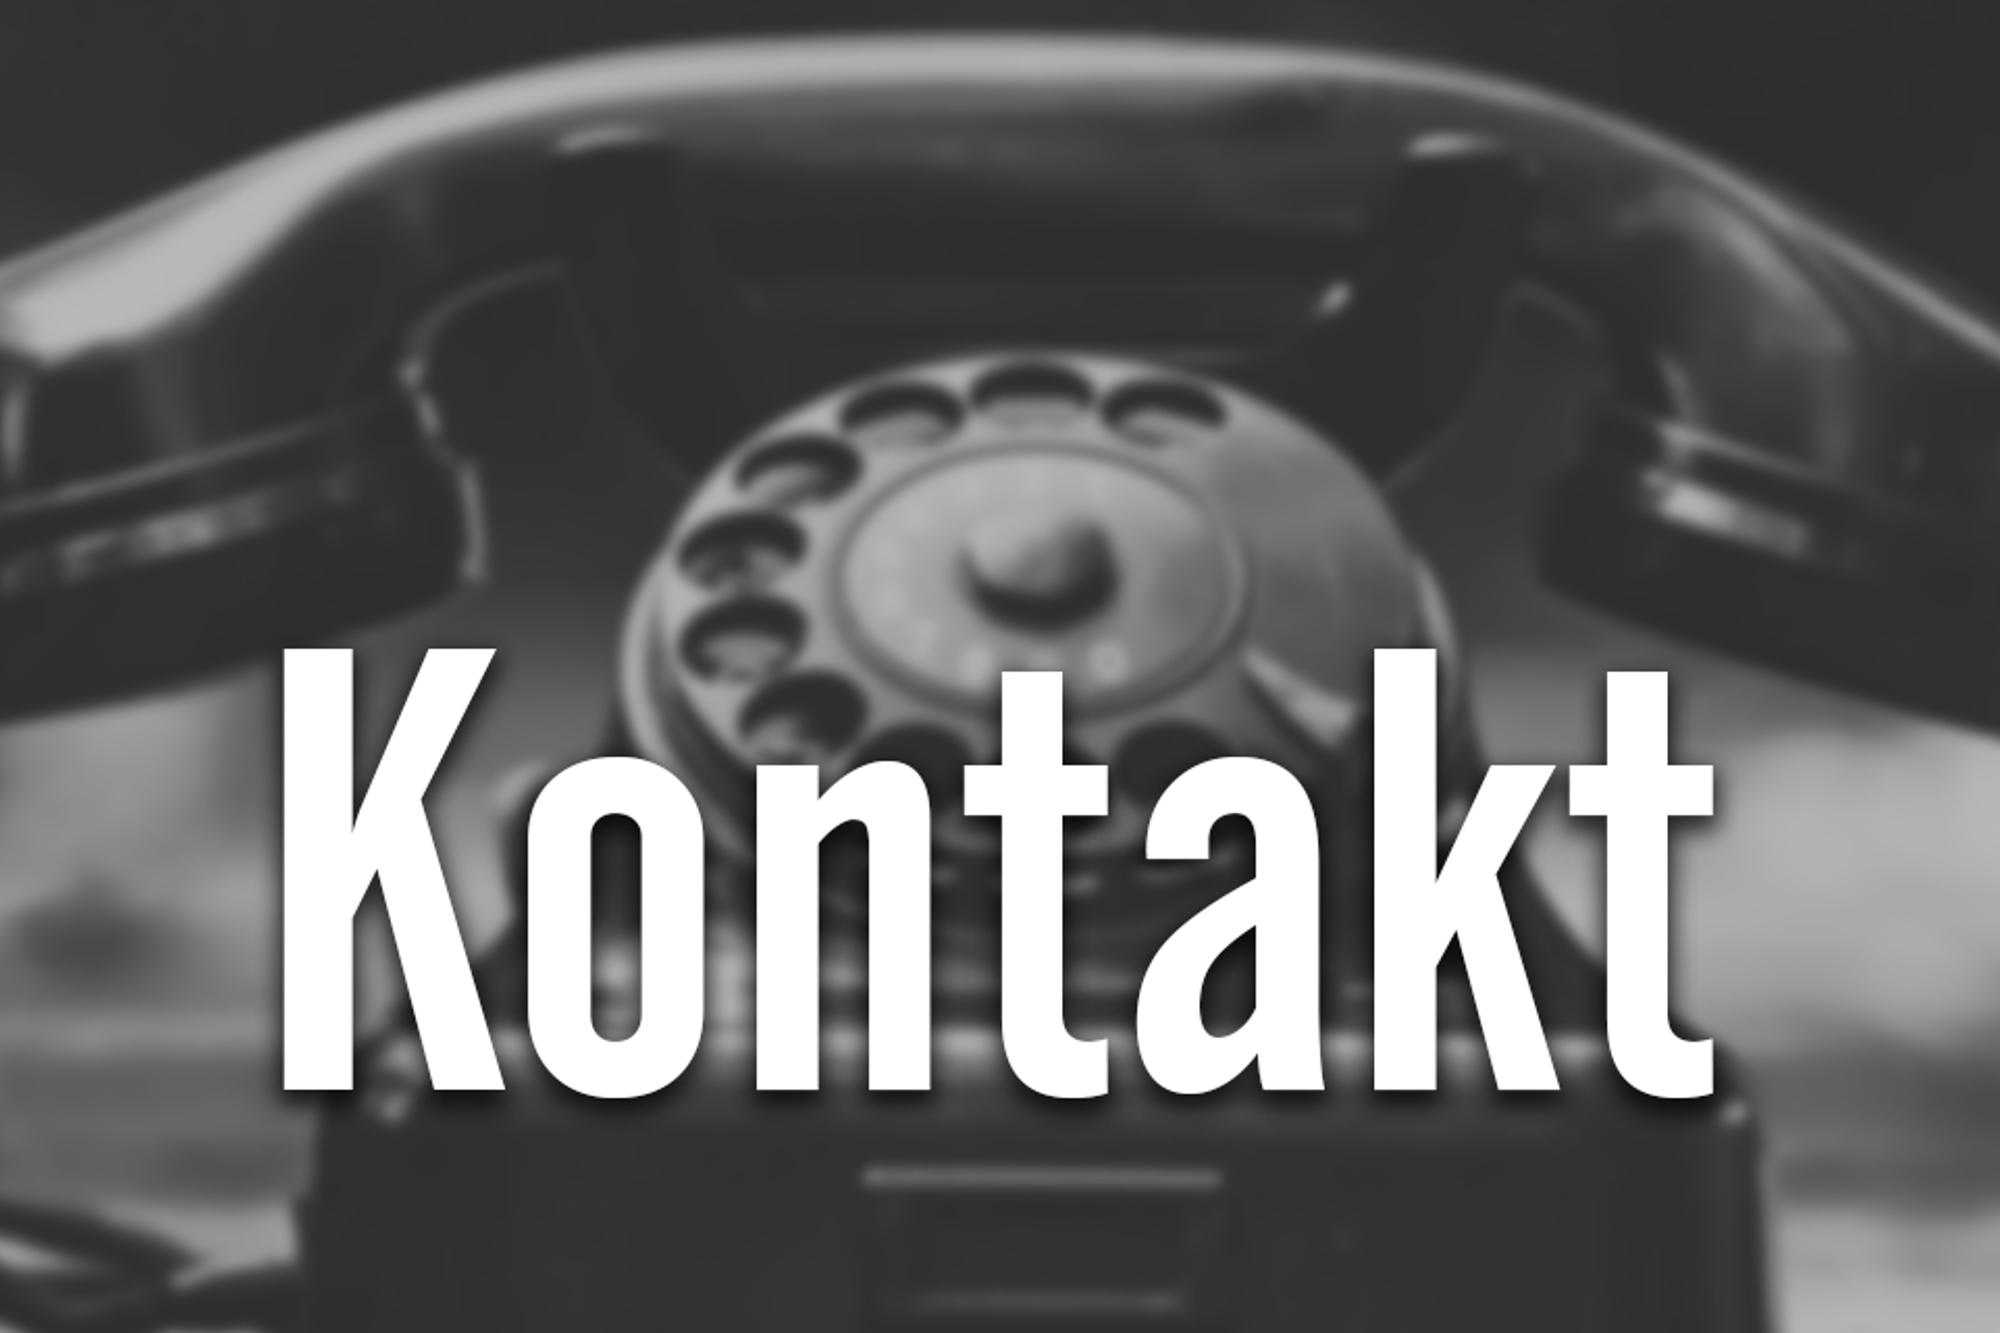 En bild på en snurrtelefon med texten "Kontakt".